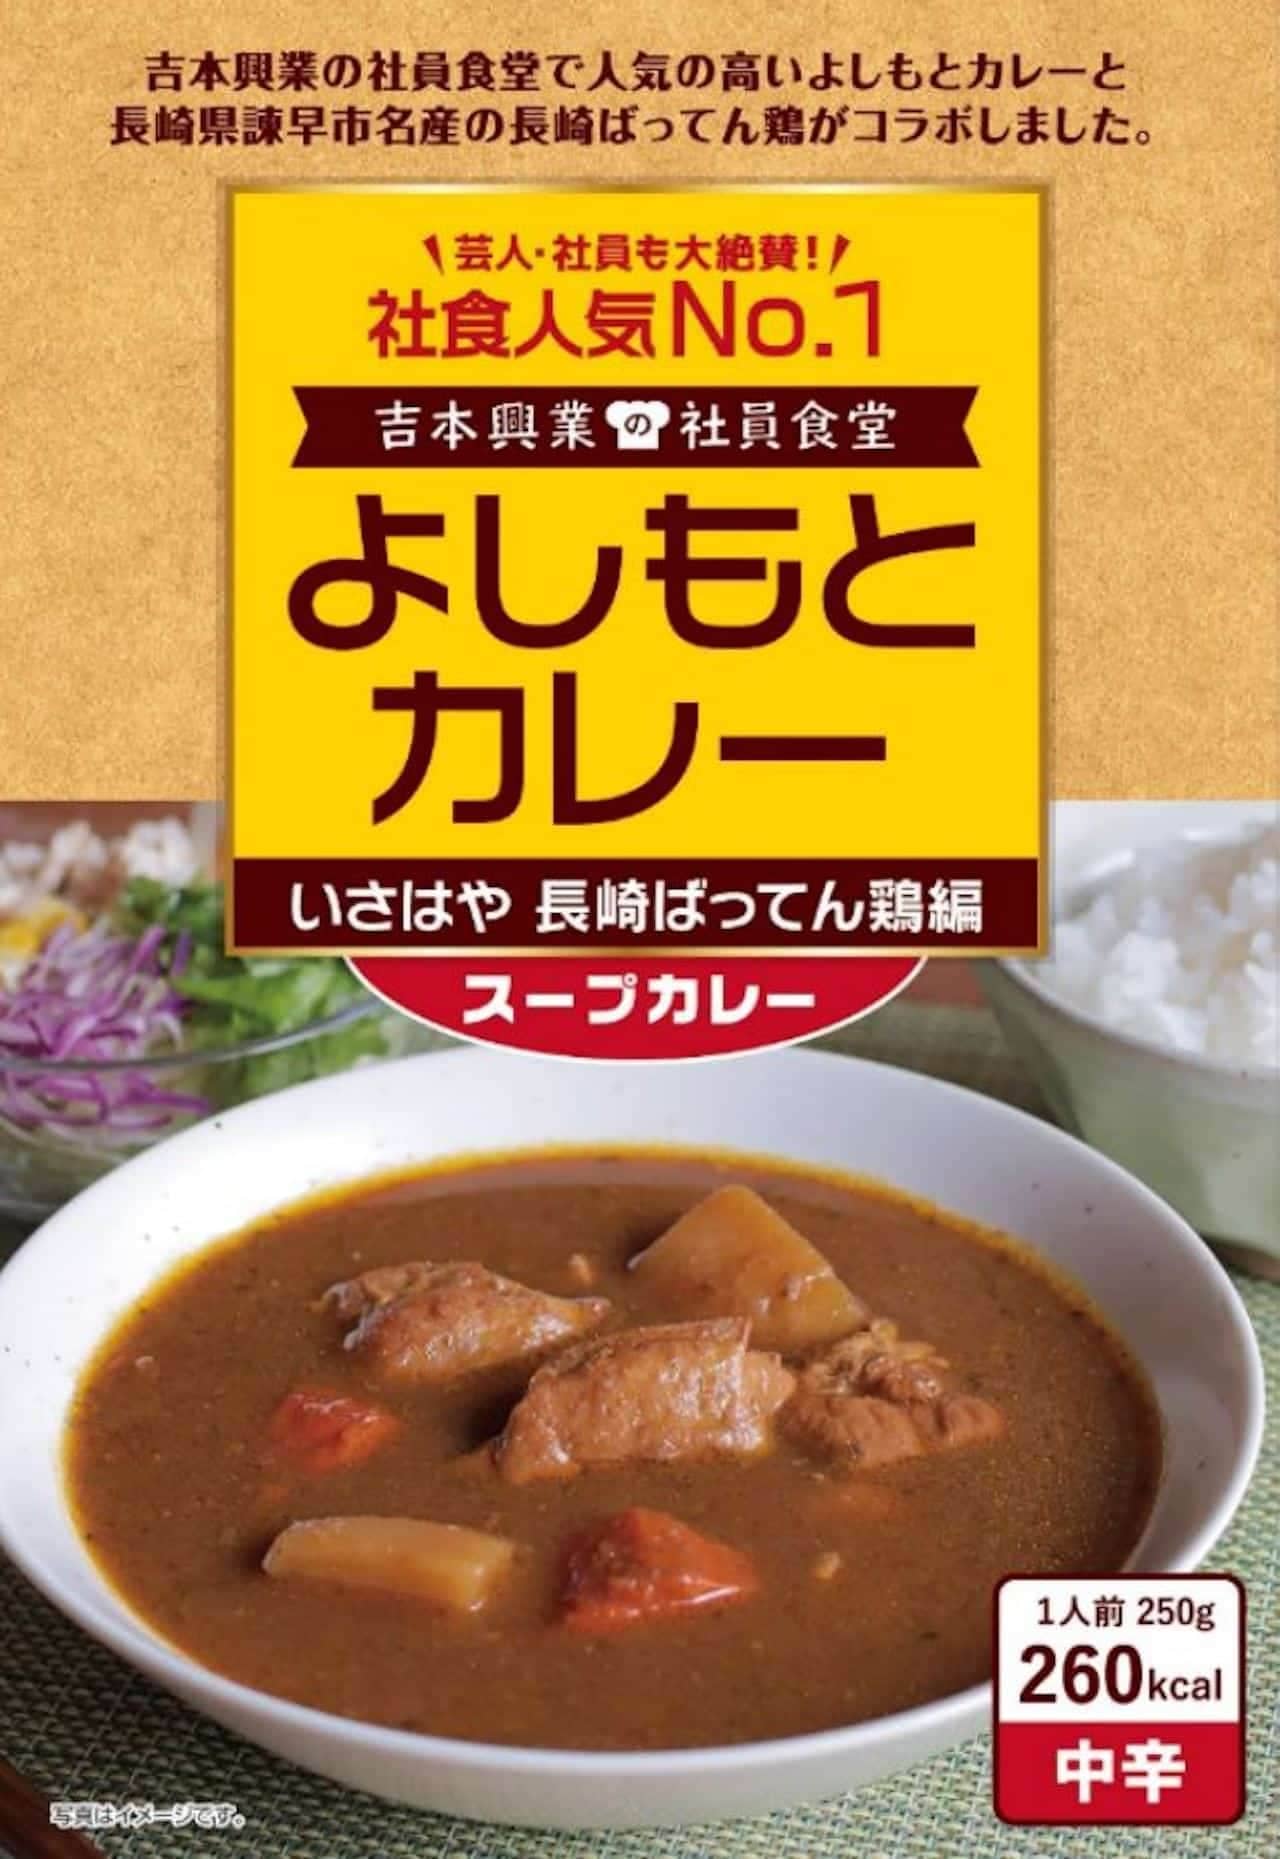 Yoshimoto Curry - Isahaya Nagasaki Battens Chicken Edition